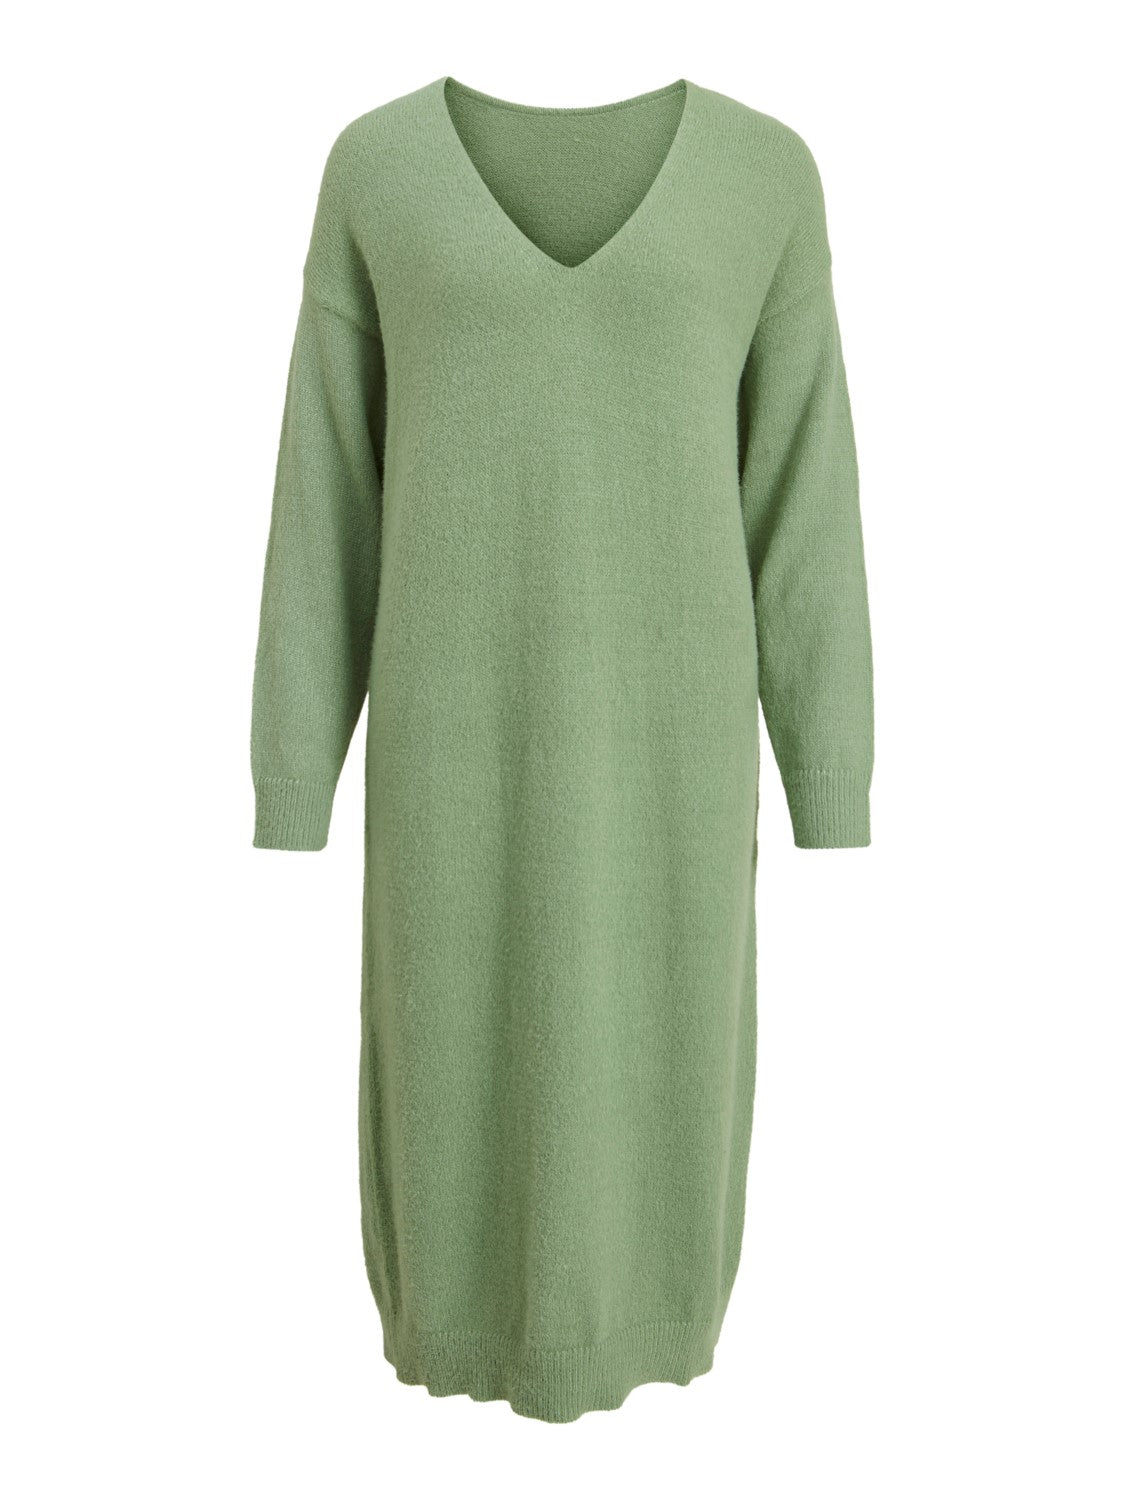 Eami Knit Dress (Mineral Green)